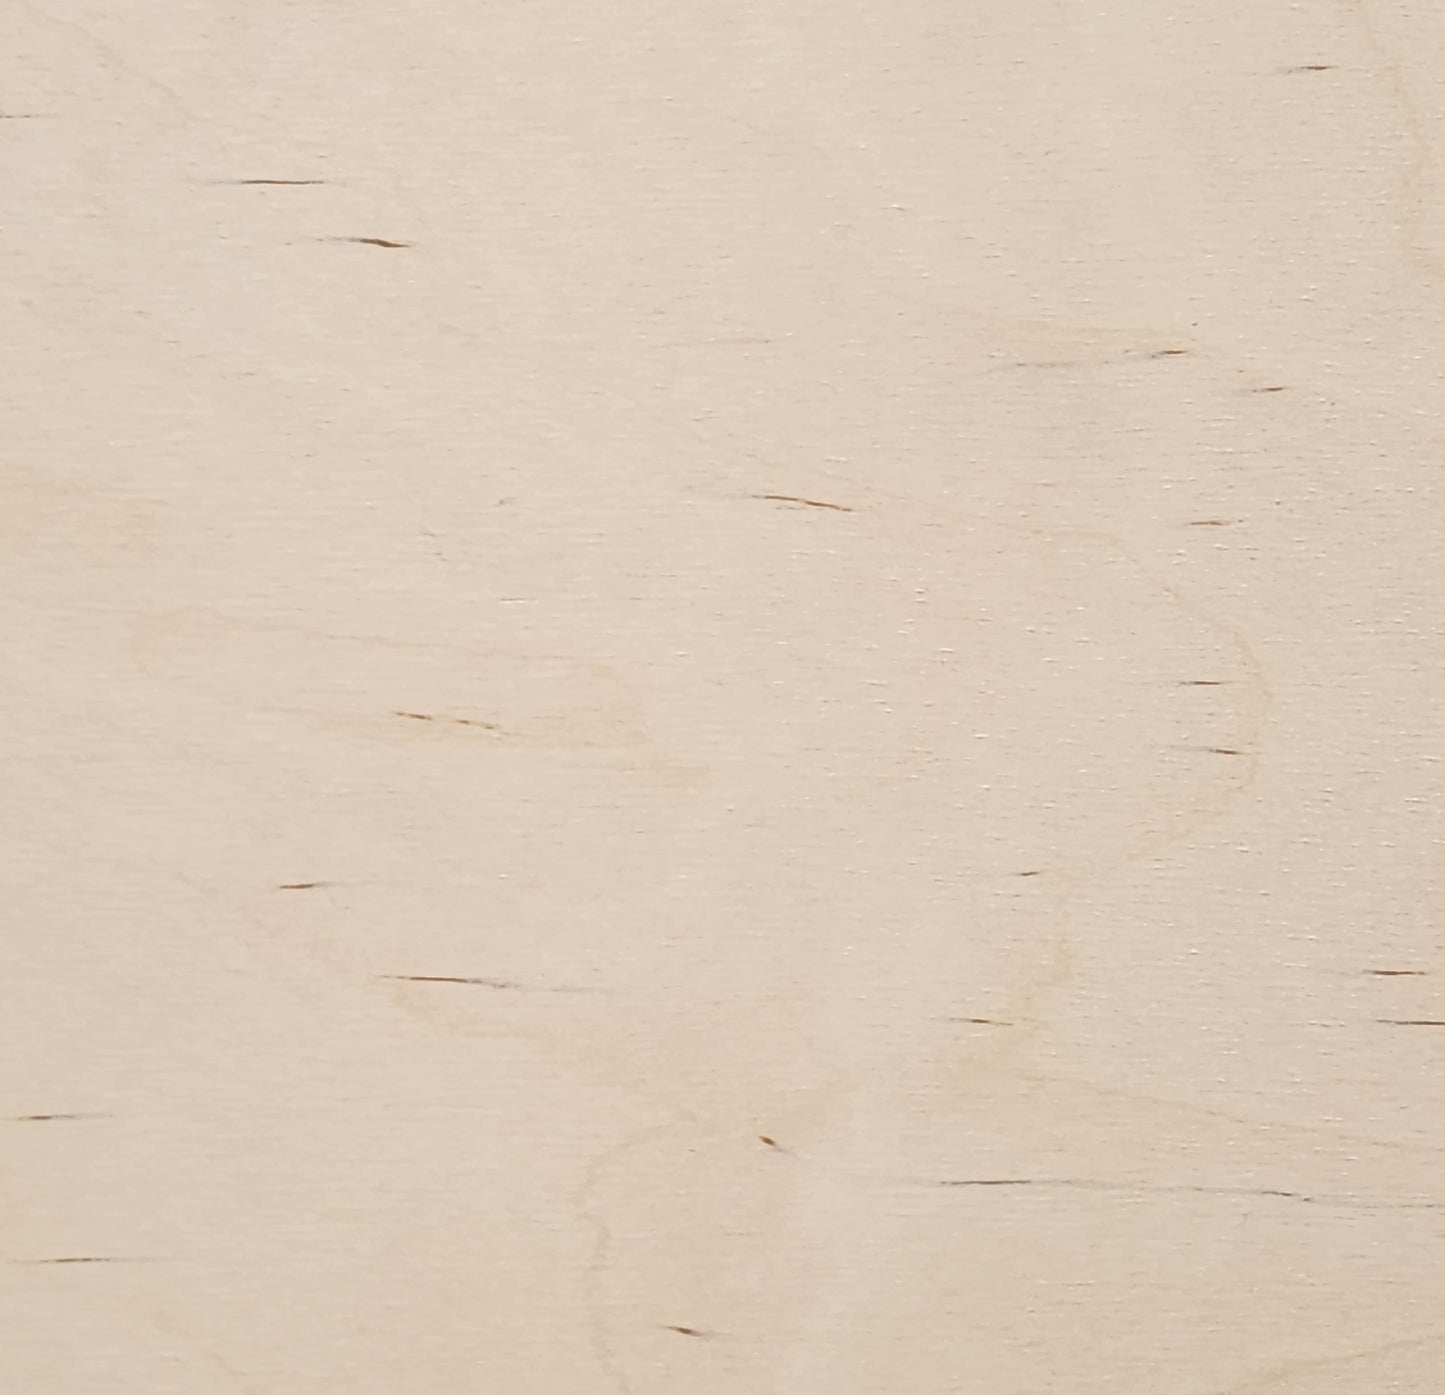 1/4" - B/BB - Premium Baltic Birch Plywood 11.5" x 11.5"